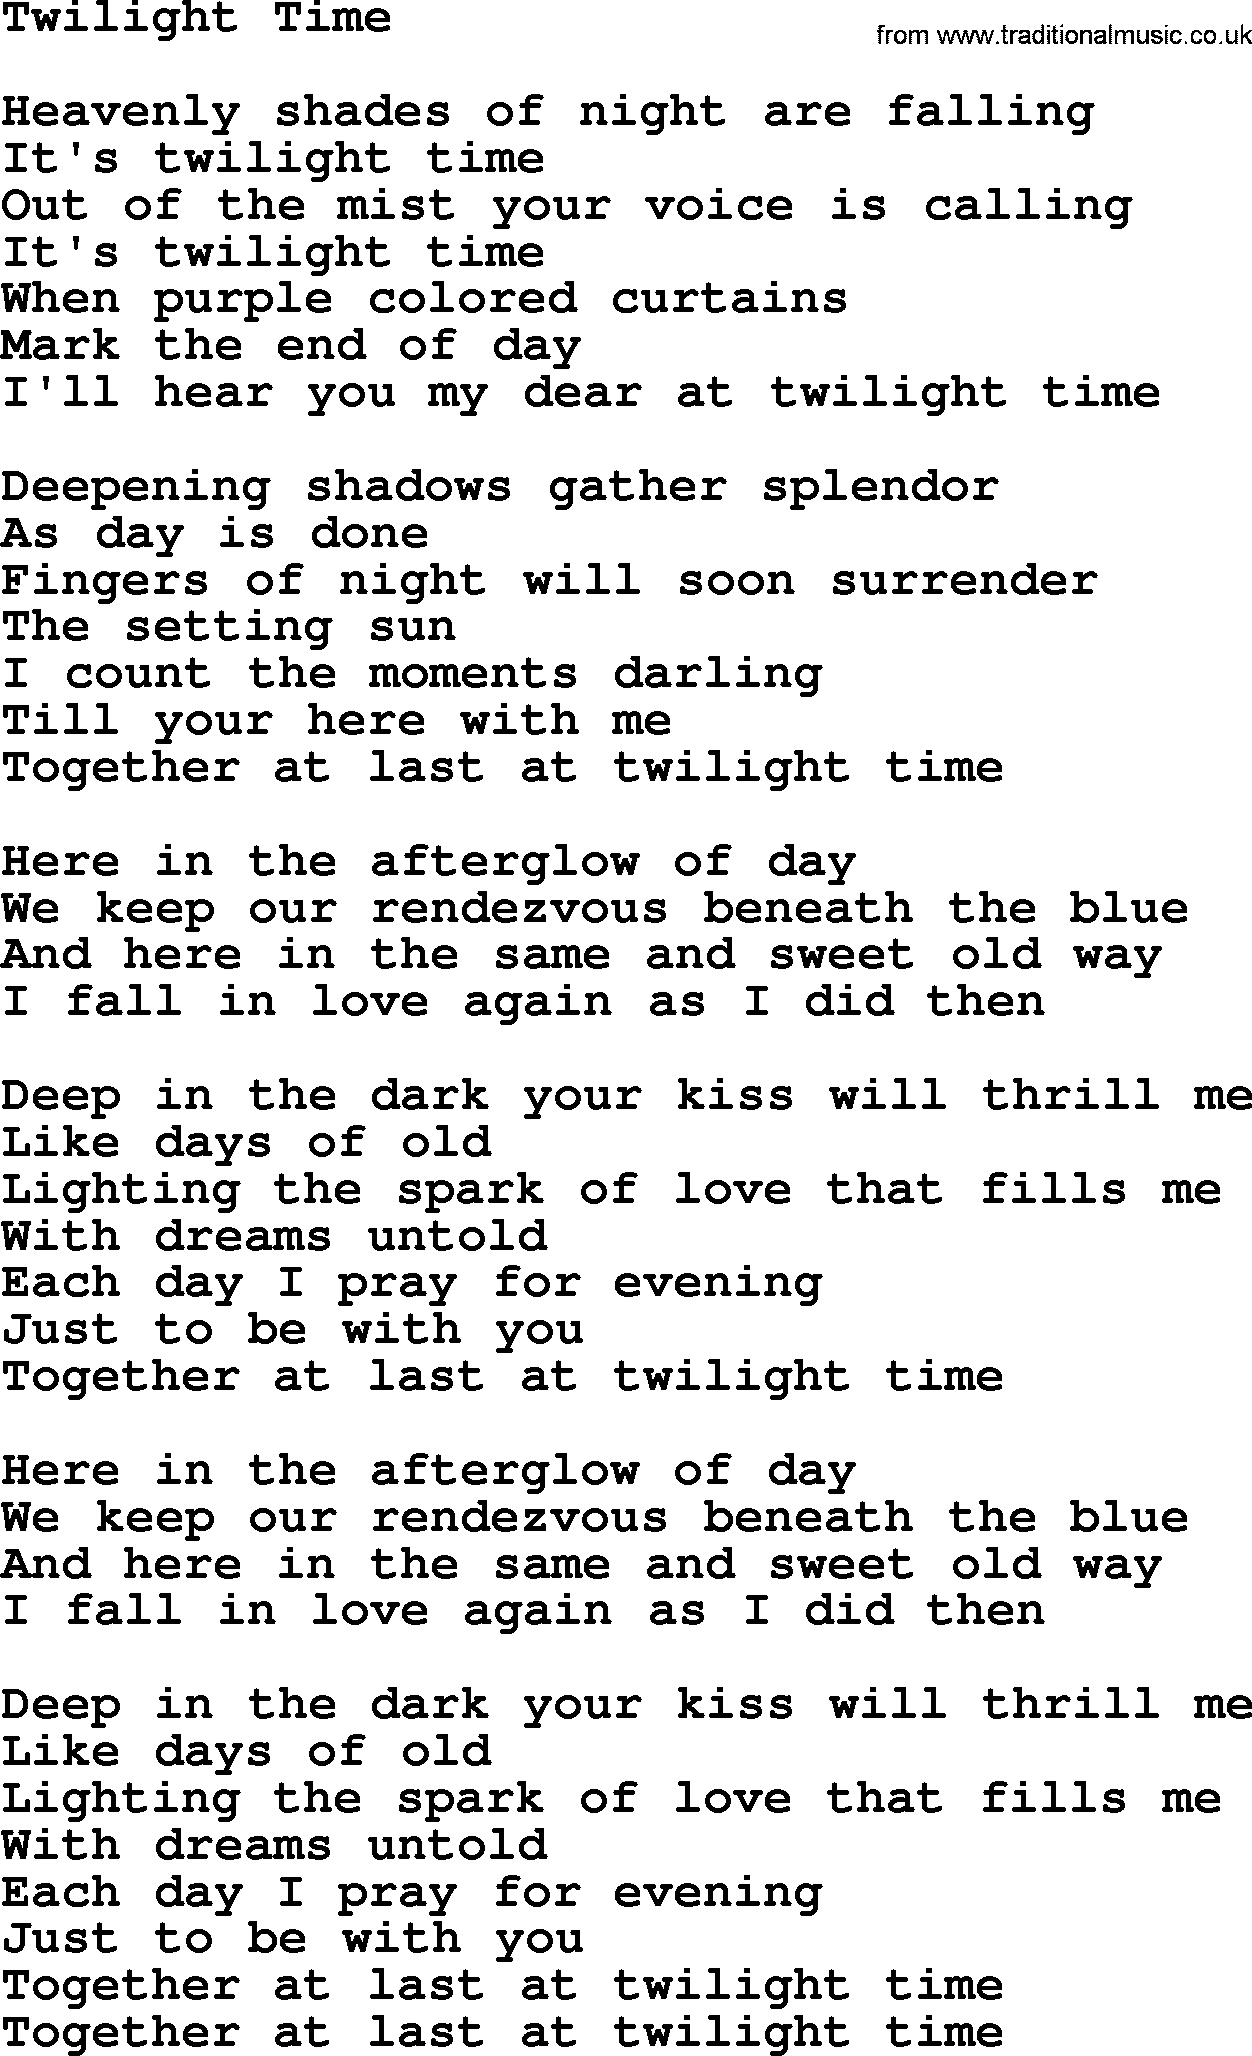 Willie Nelson song: Twilight Time lyrics